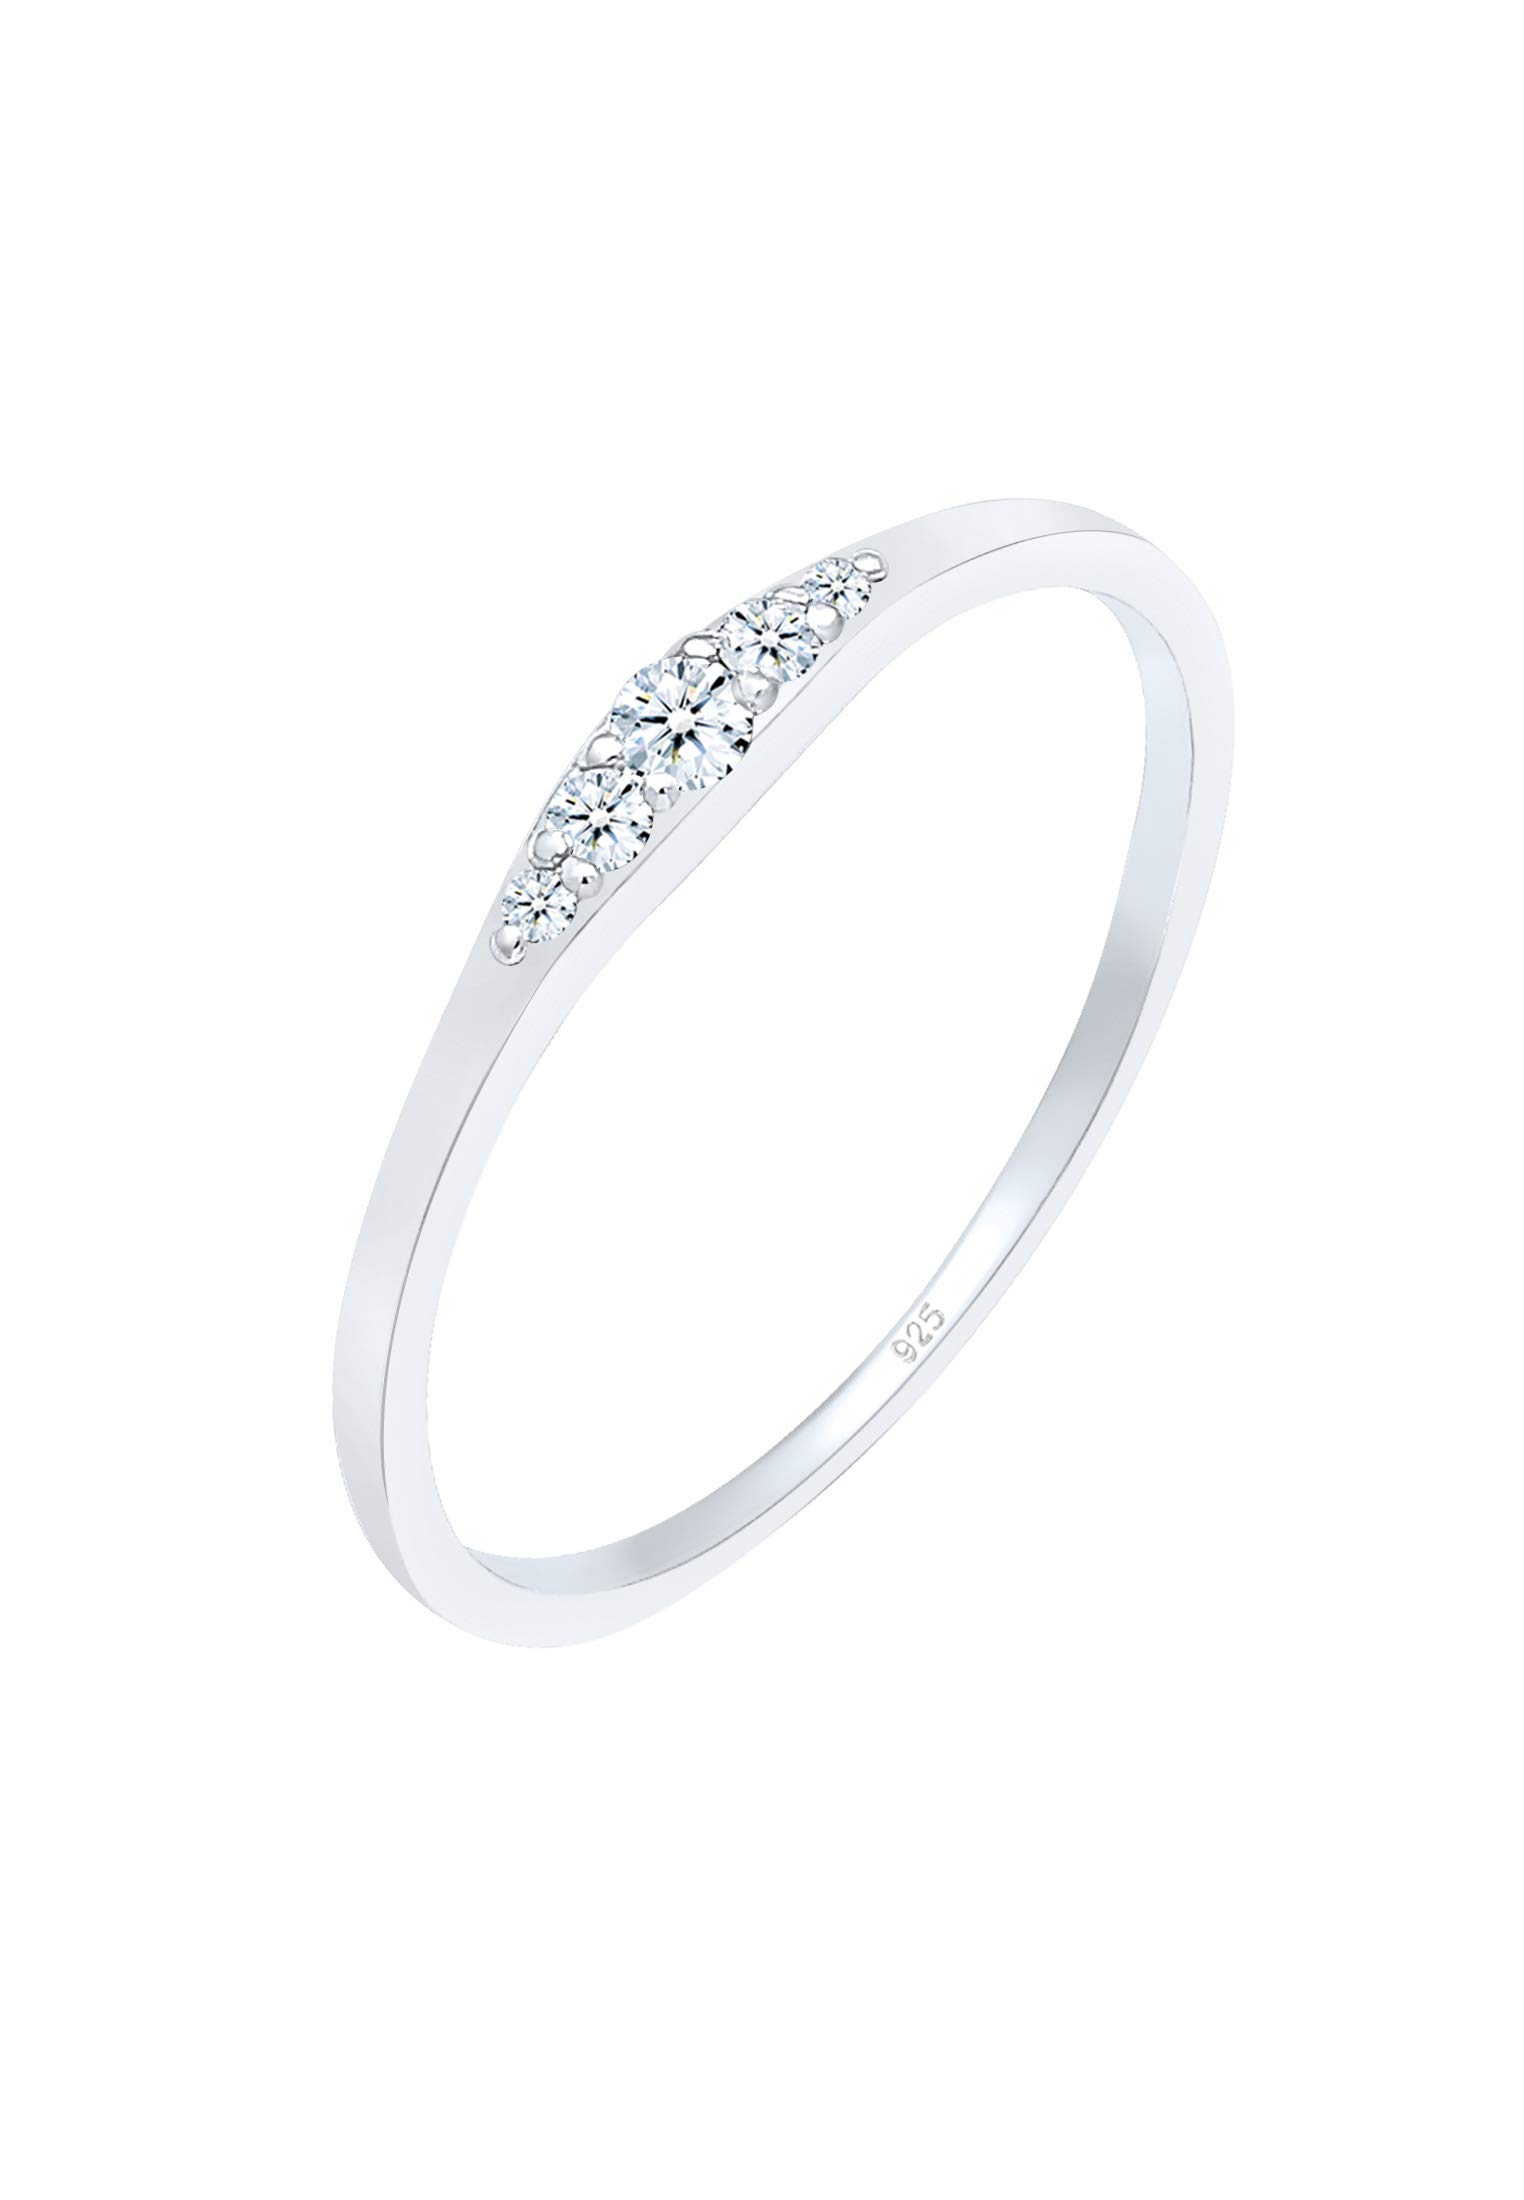 DIAMORE Ring Damen Verlobungsring mit Diamant (0.09 ct) Bridal in 925 Sterling Silber